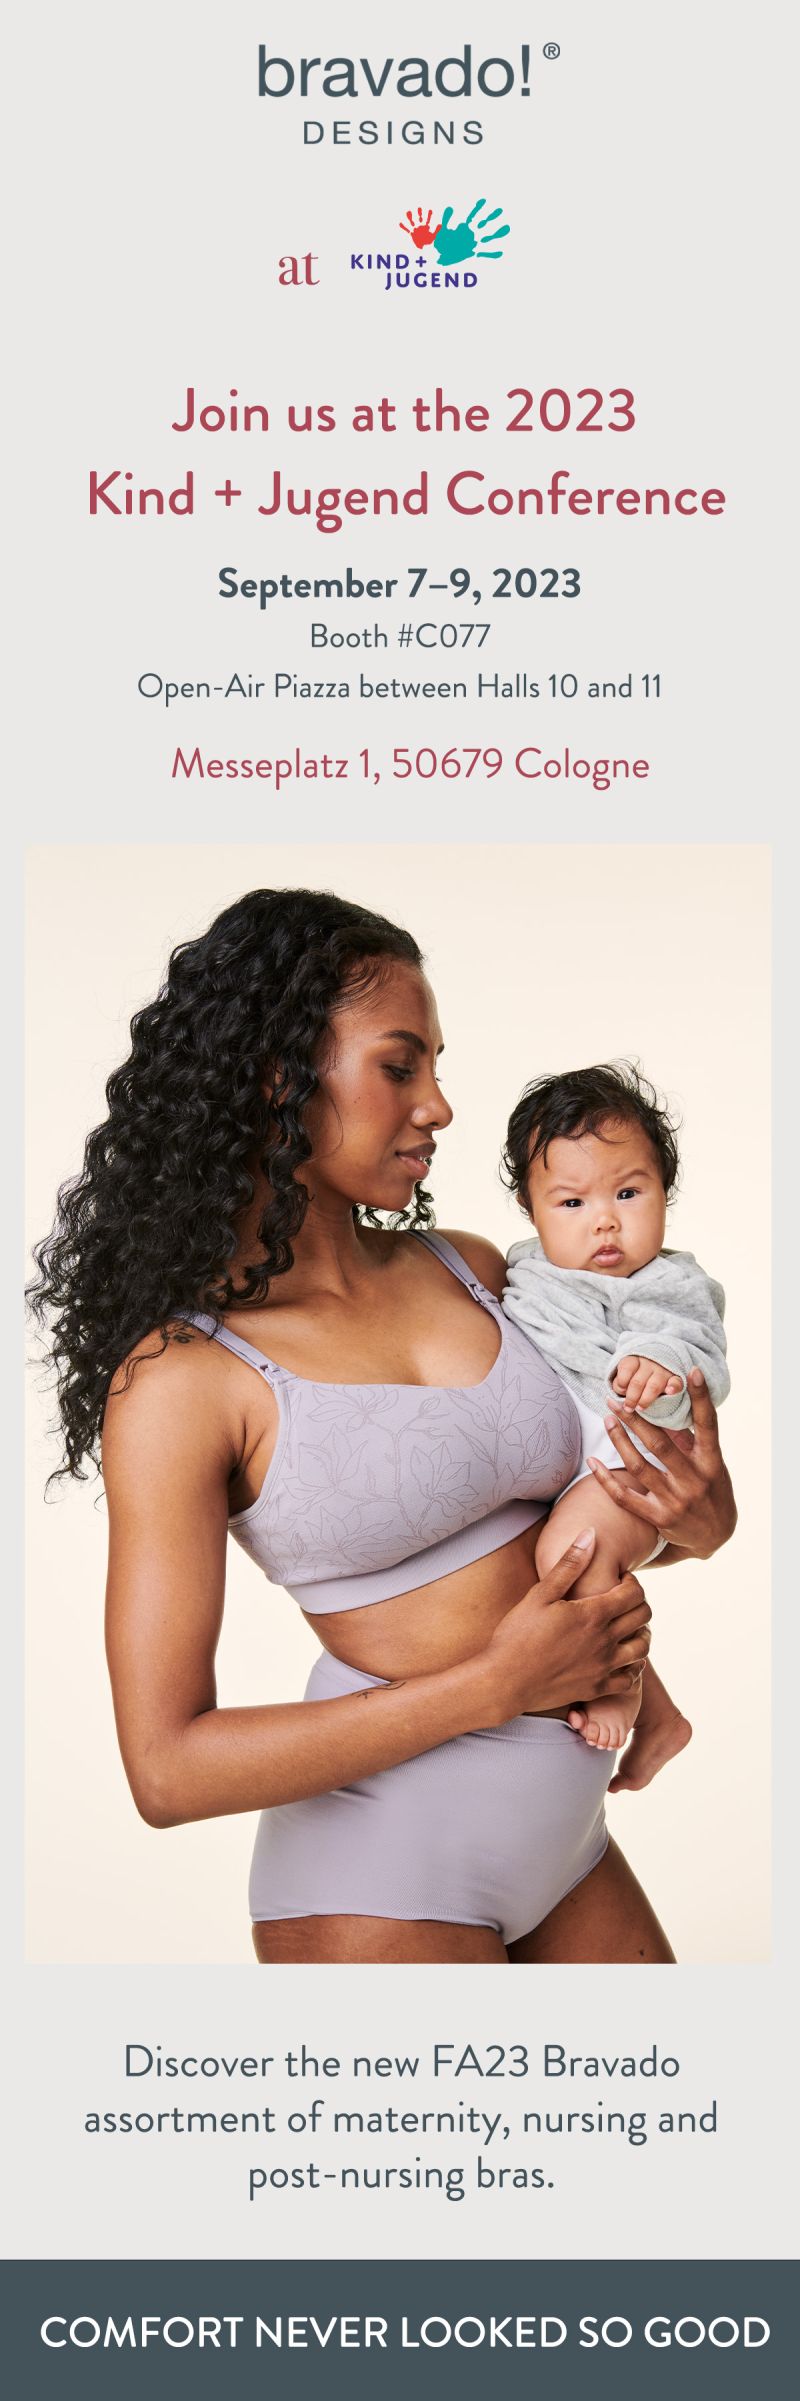 Mario Pace on LinkedIn: #tradeshow #baby #toddler #c077 #maternity #nursing  #bras #accessories…